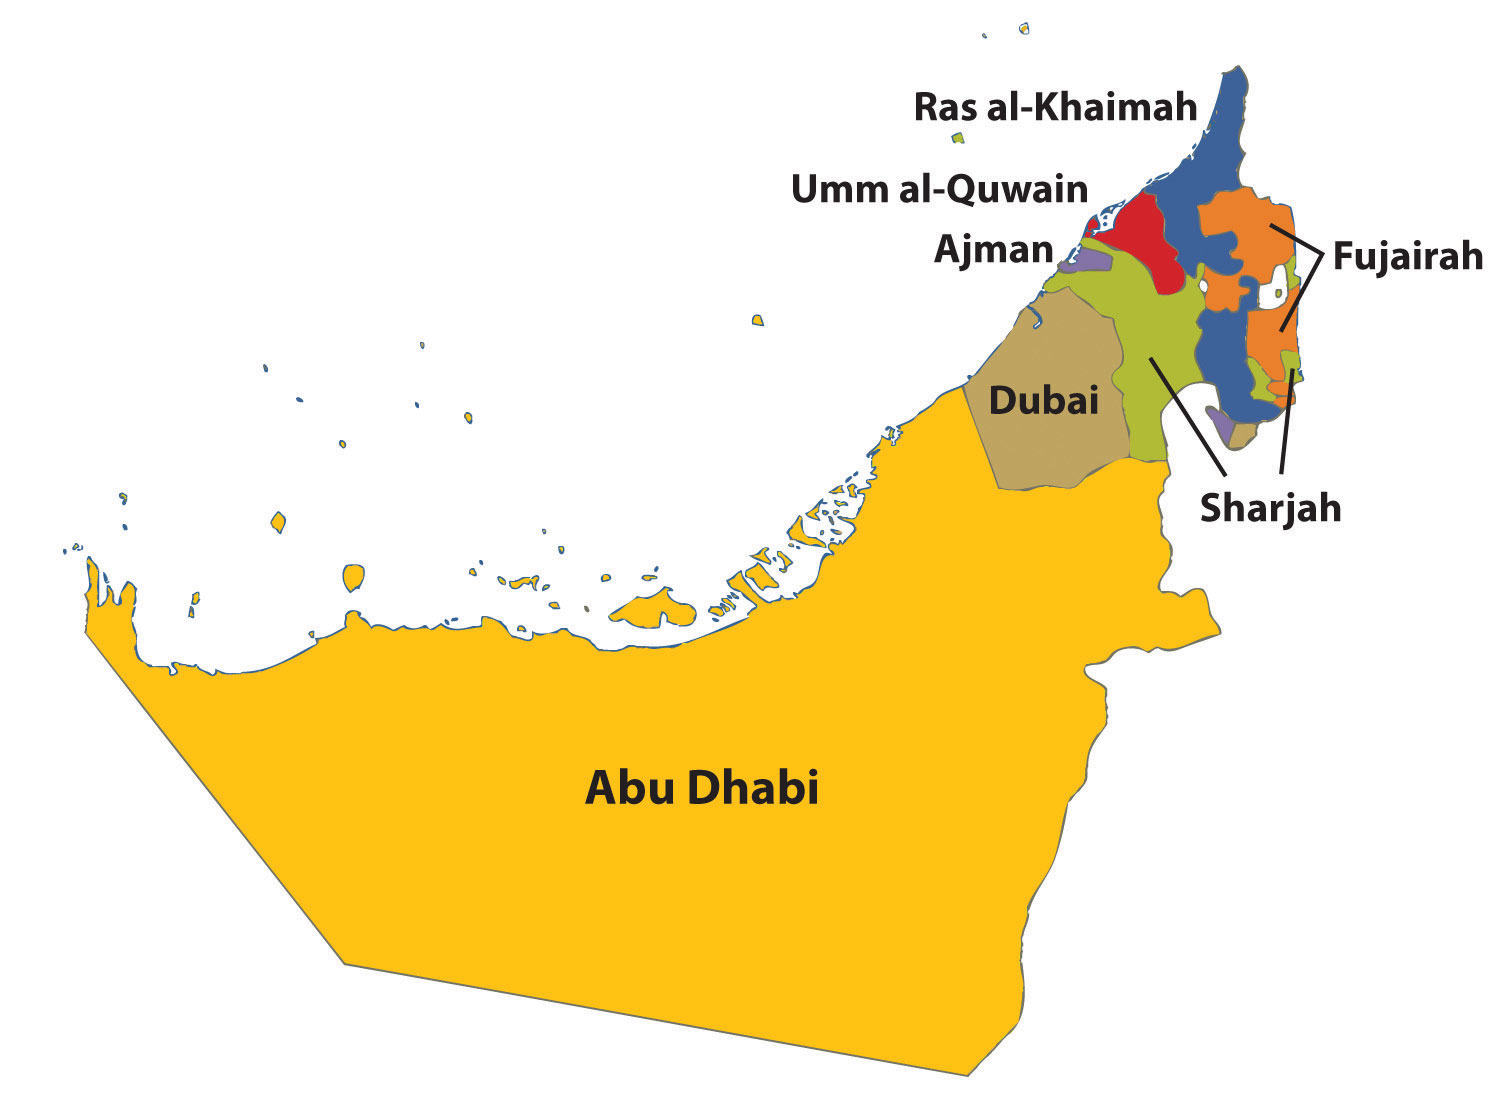 uae: United Arab Emirates